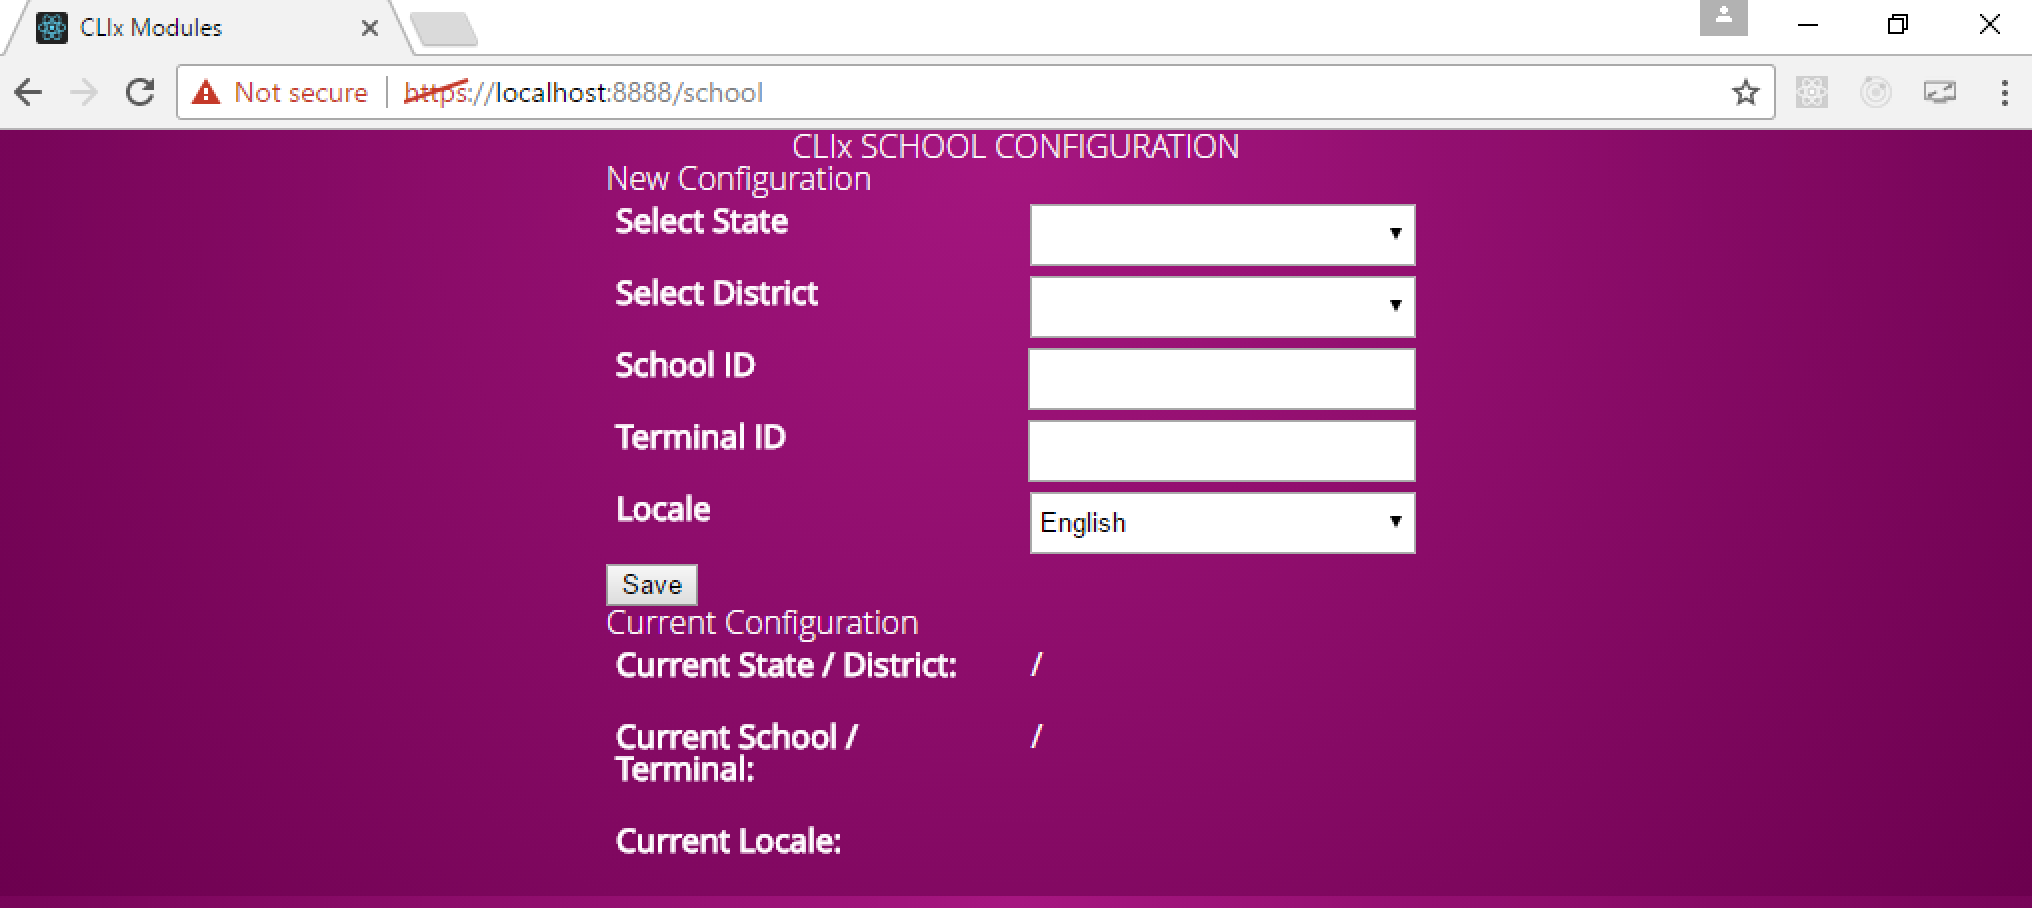 School configuration page